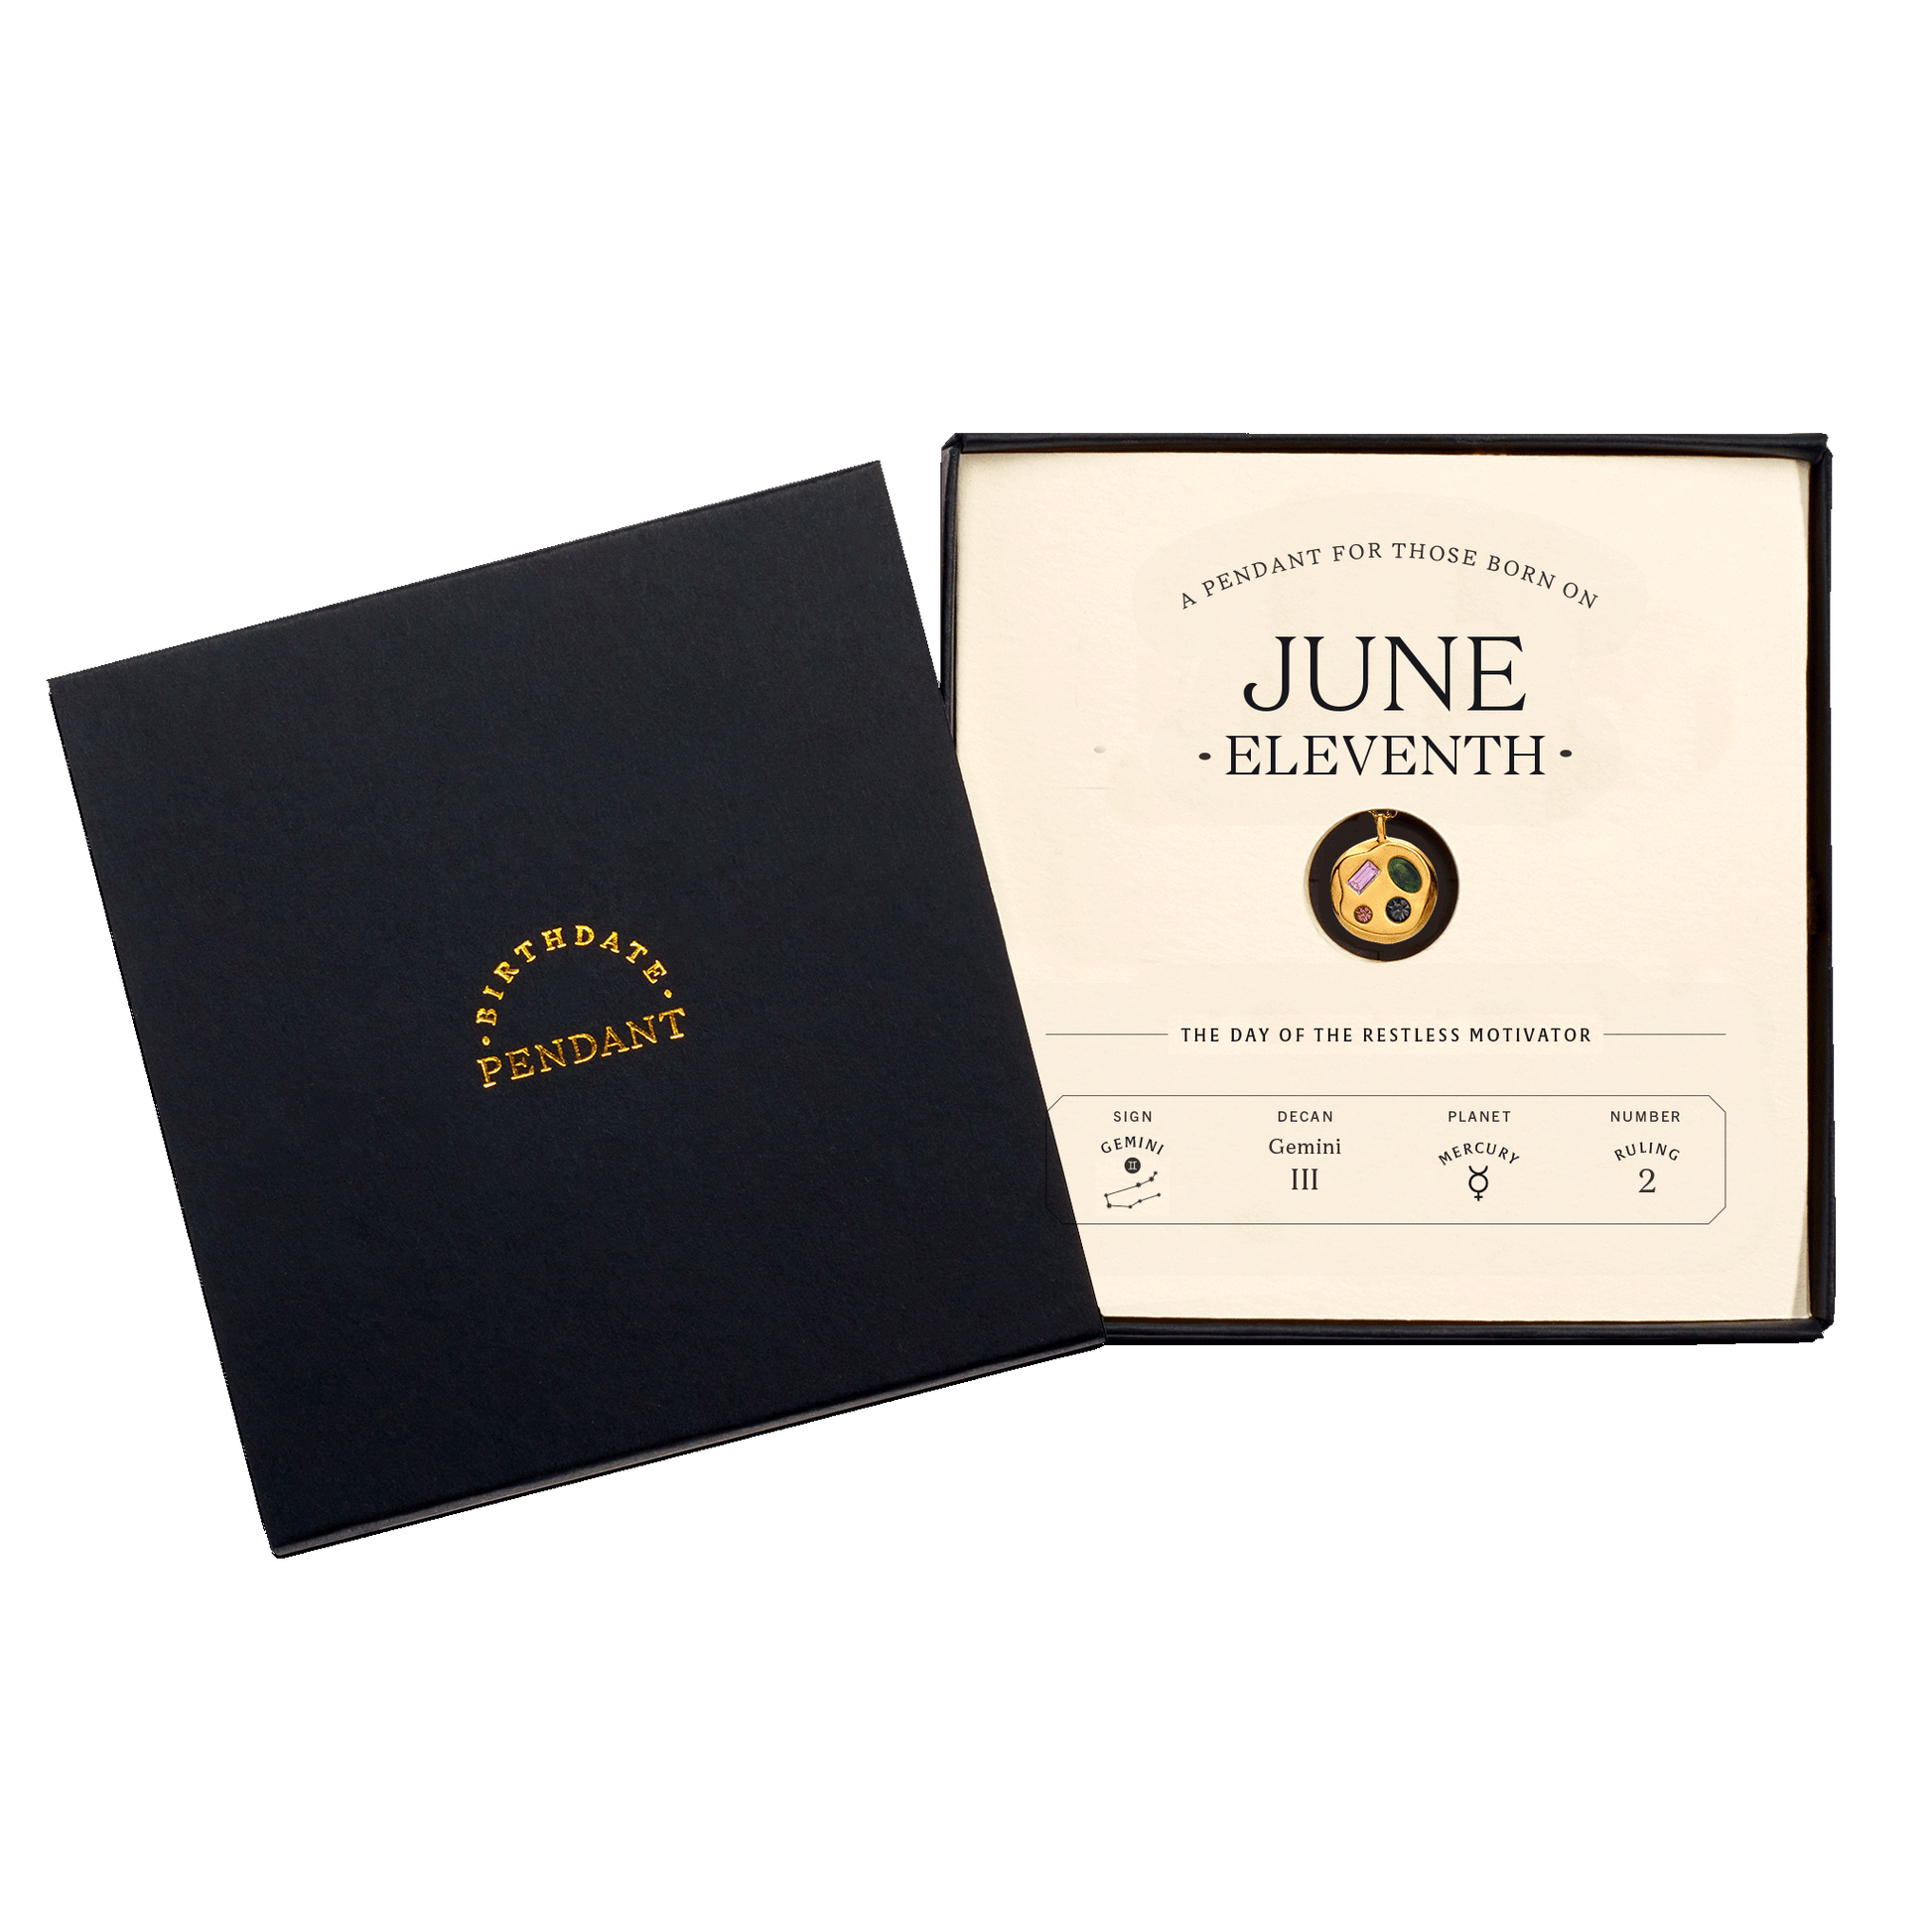 The June Eleventh Pendant inside its box